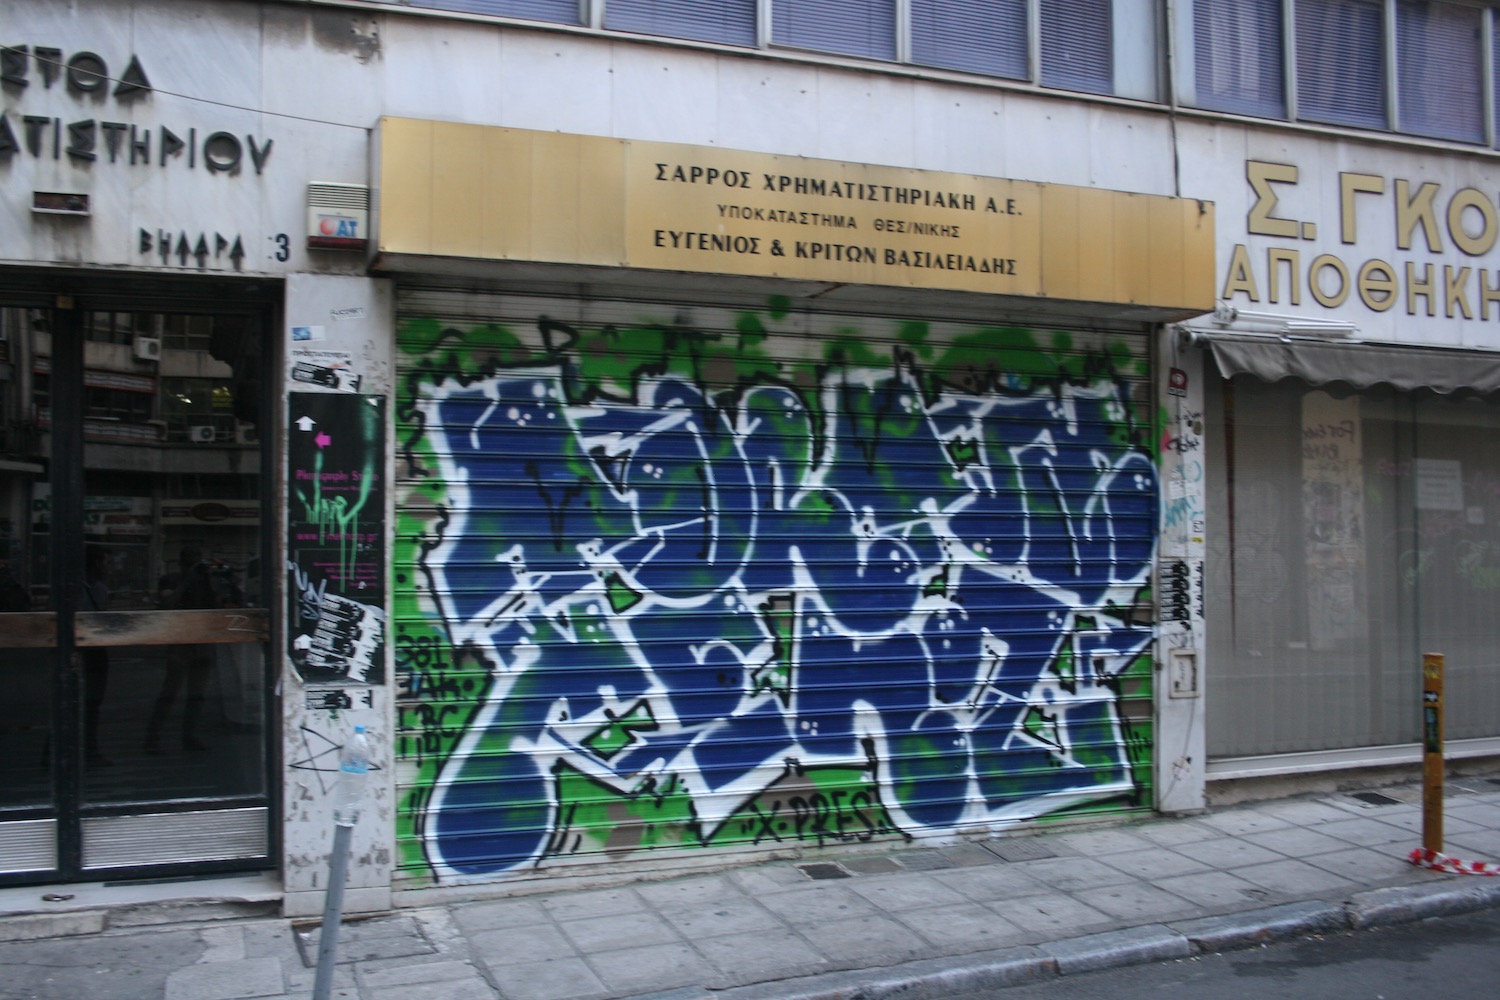 a graffiti on a building